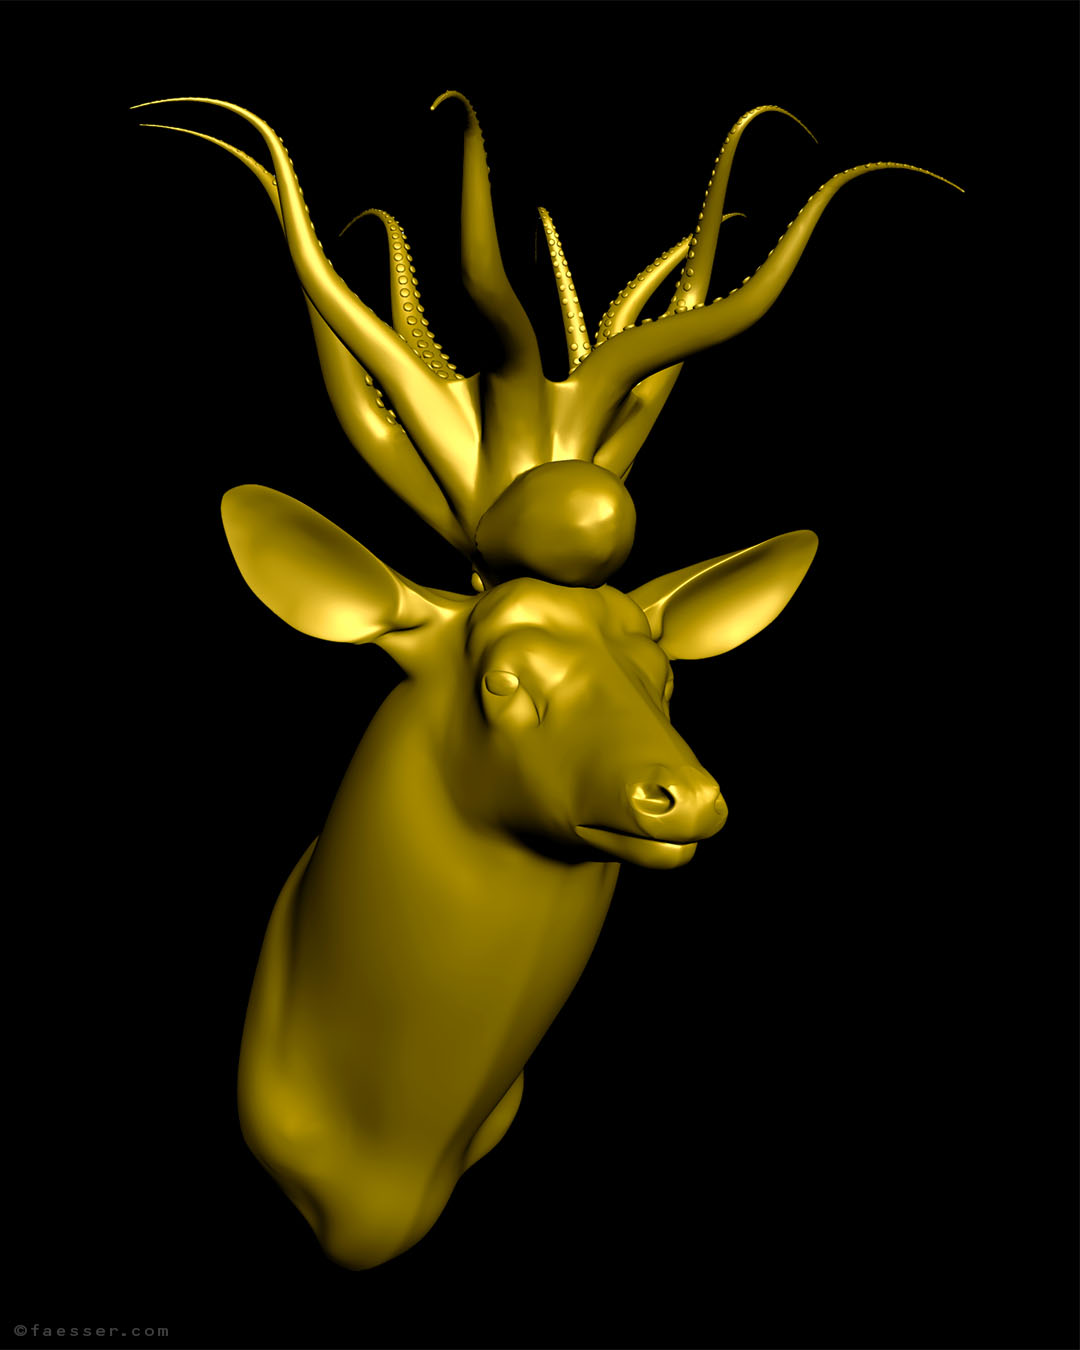 Goldfingers: golden deer trophy with golden squid sculpture as antlers; work of art as figurative sculpture; artist Roland Faesser, sculptor and painter 2017